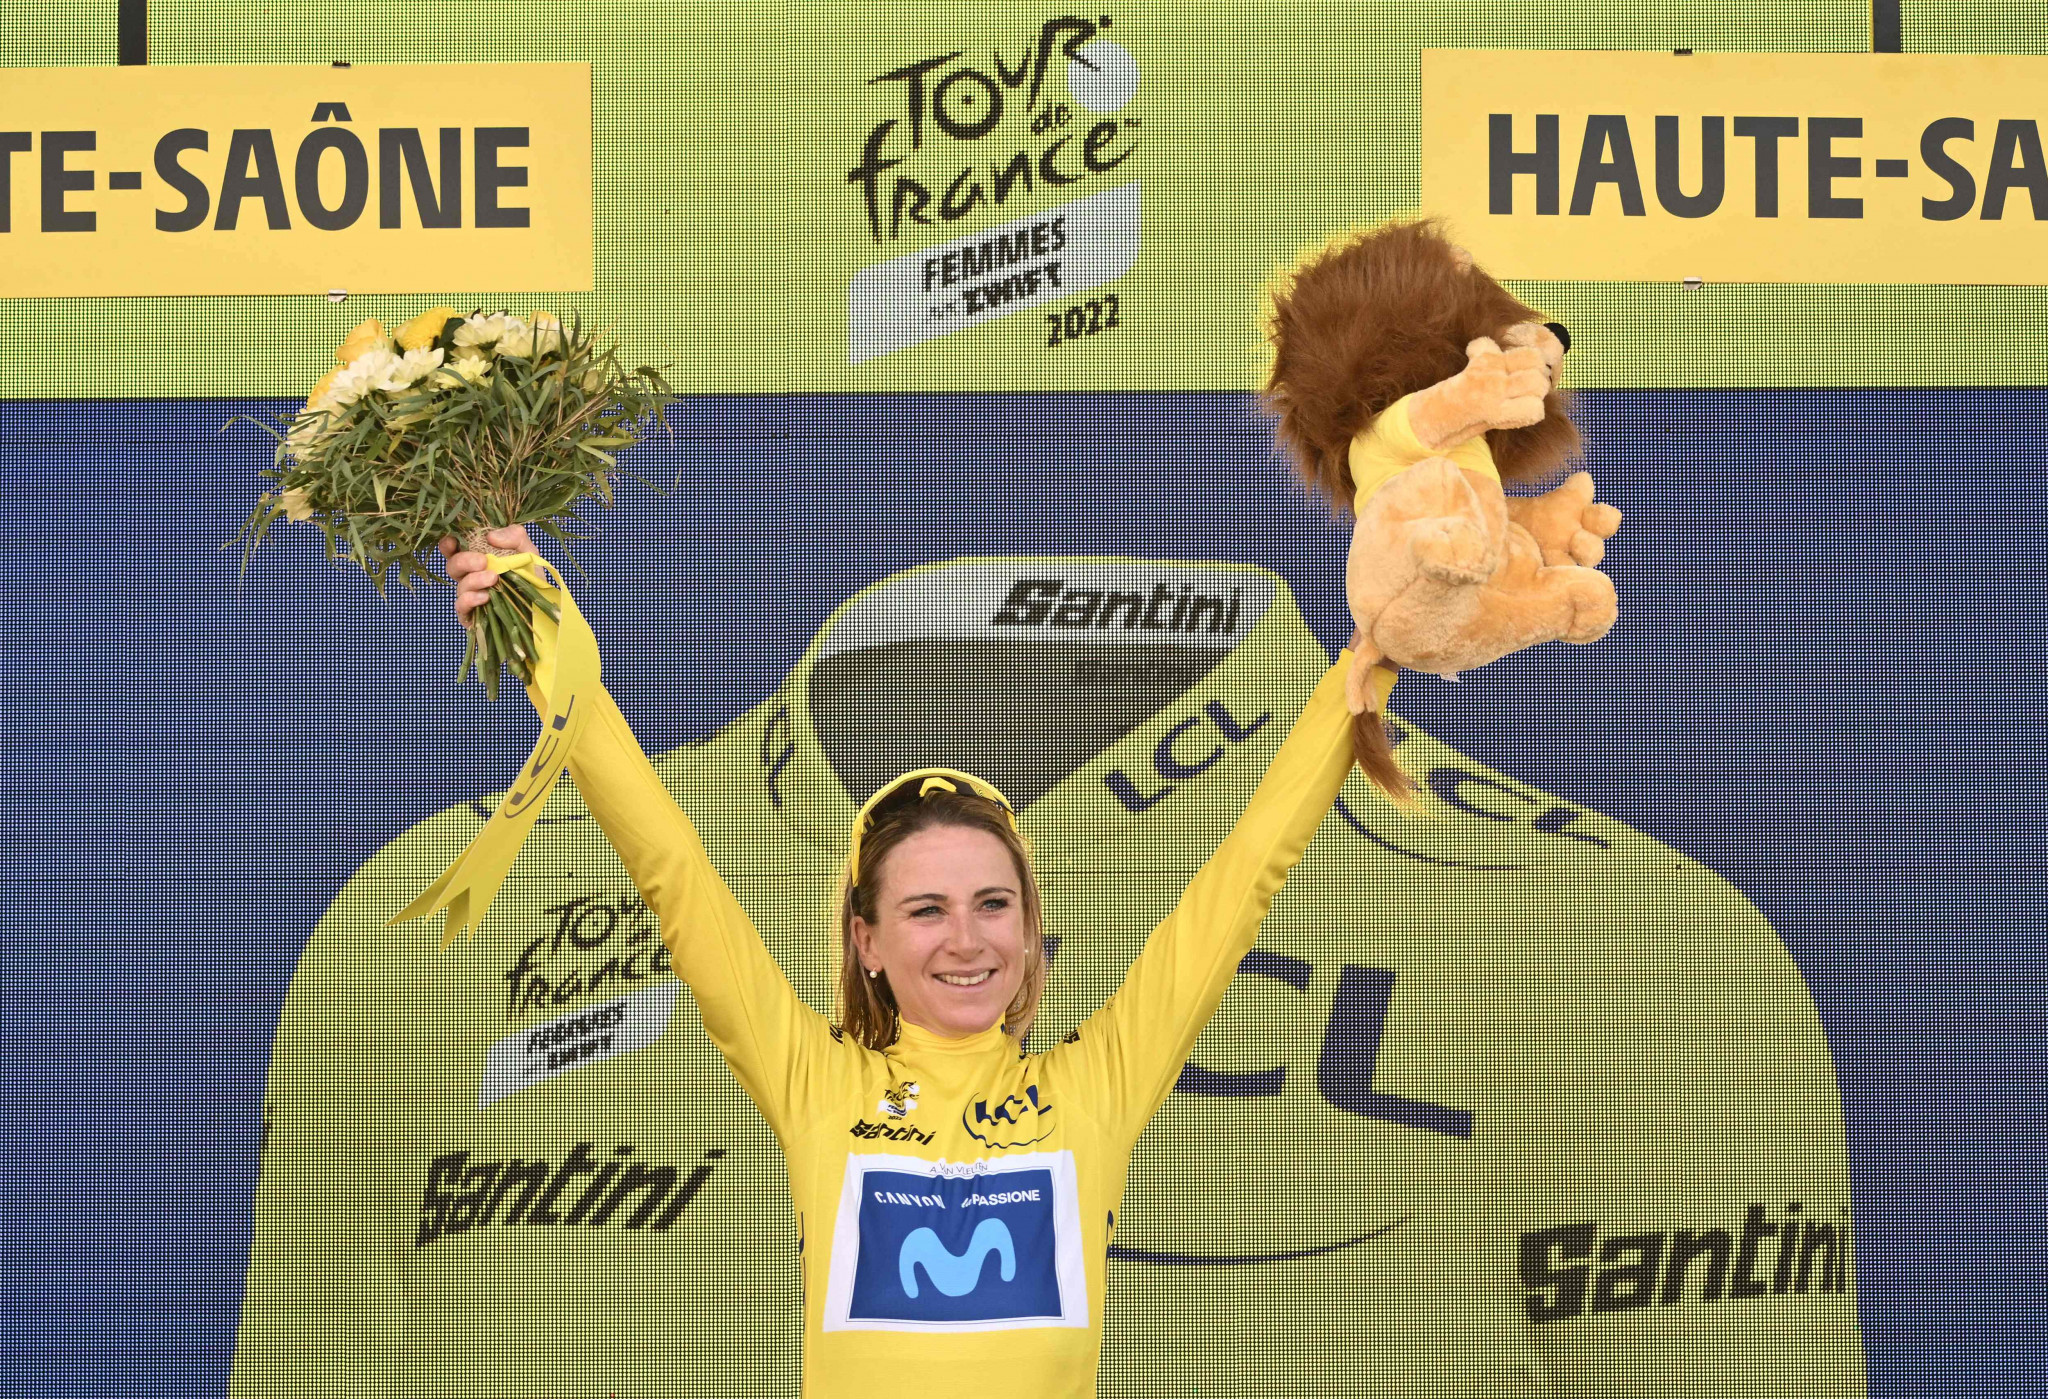 Dutch rider Annemiek van Vleuten won the final two stages to claim Tour de France Femmes victory ©Getty Images